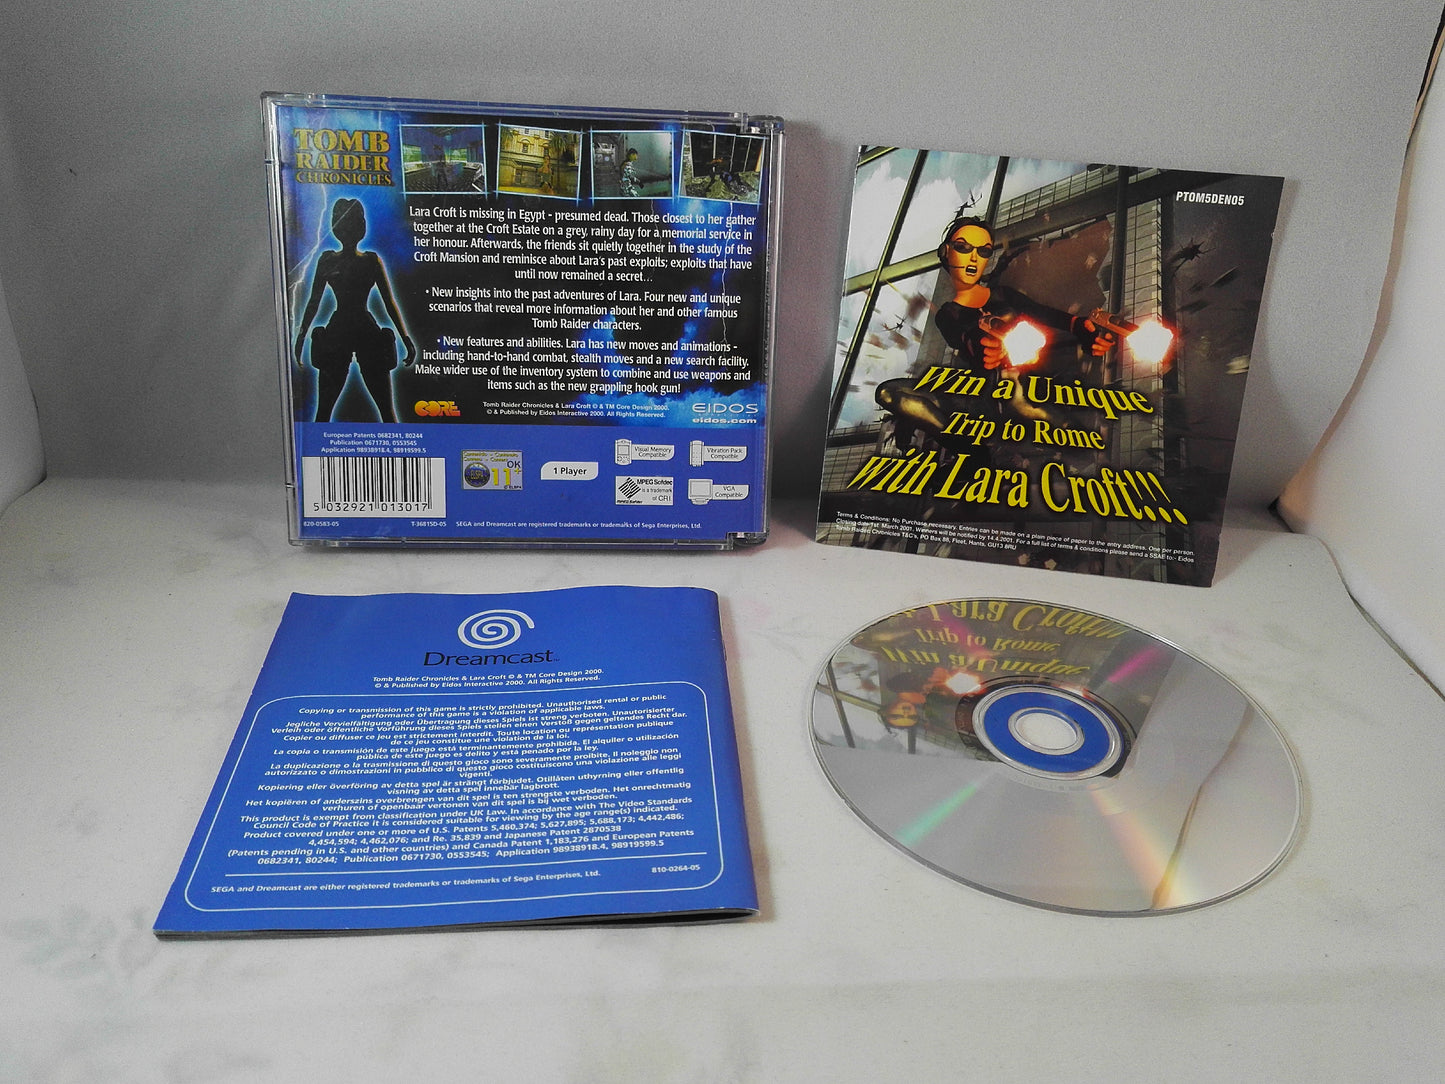 Tomb Raider: Chronicles & Last Revelations (Sega Dreamcast) game bundle